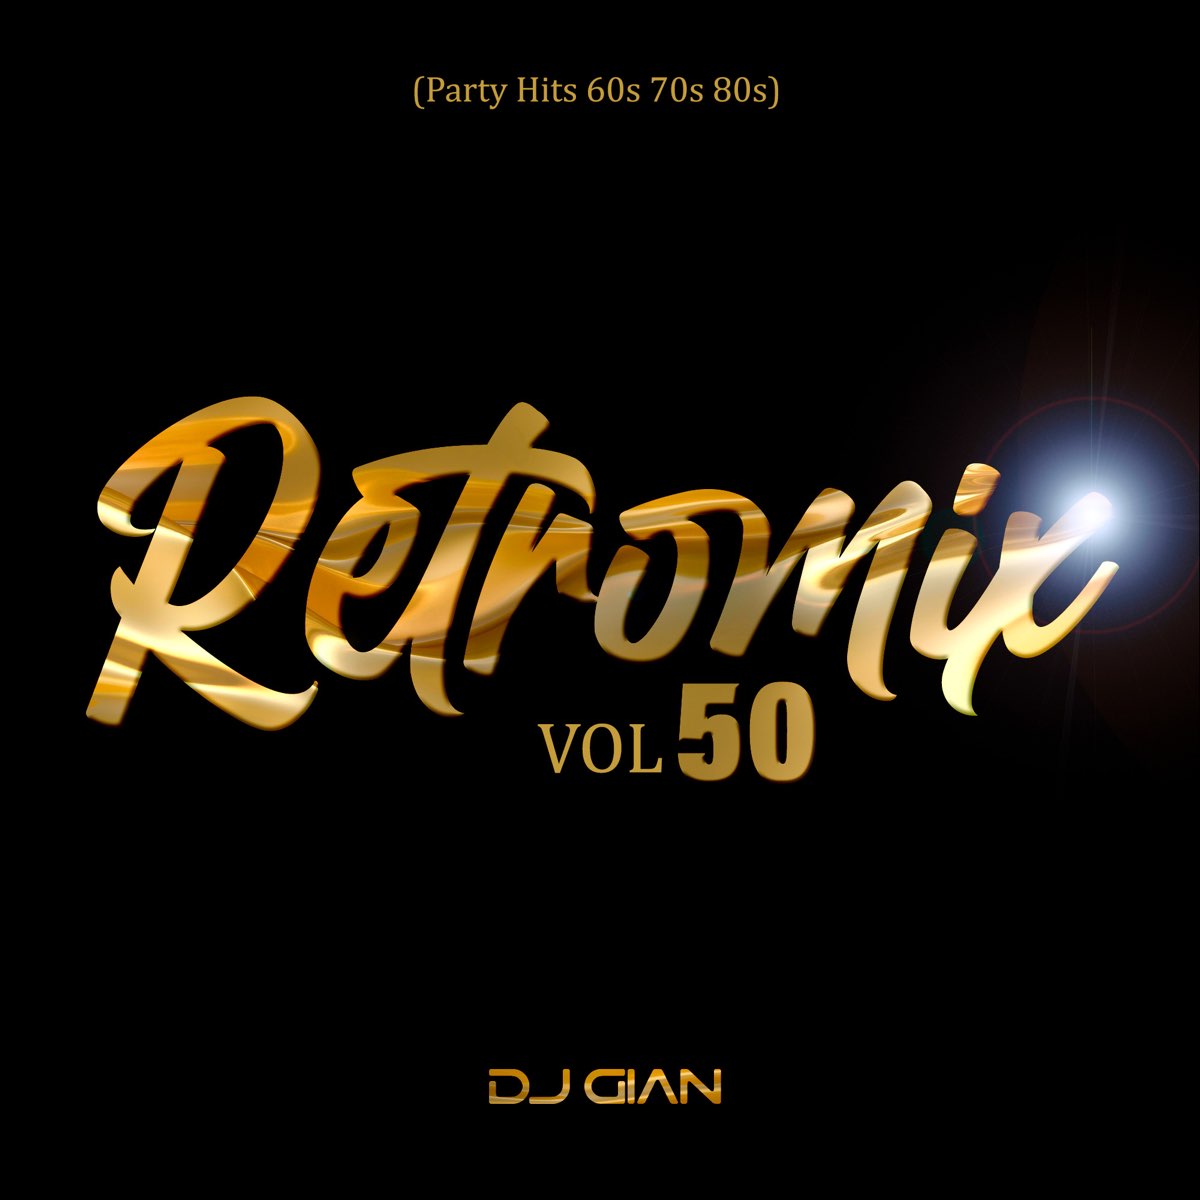 Rock - Pop en Español - 90'S RETROMIX 